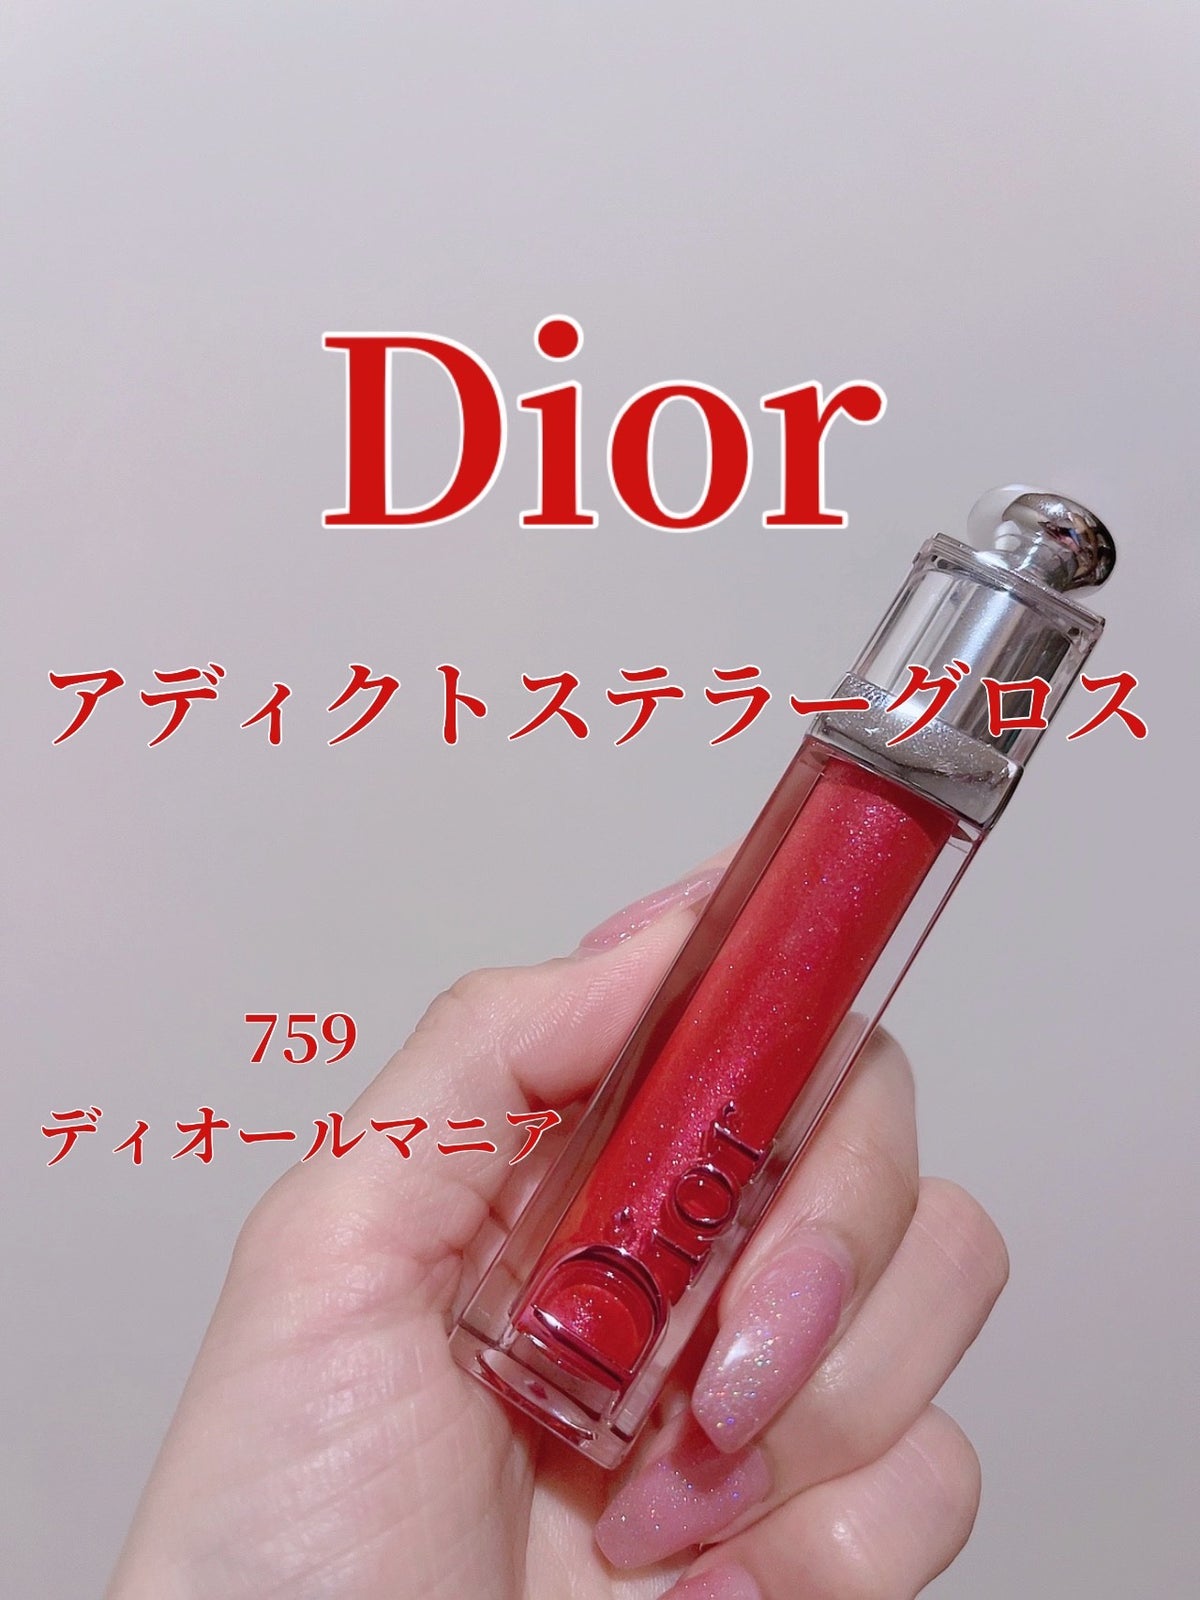 Dior 759